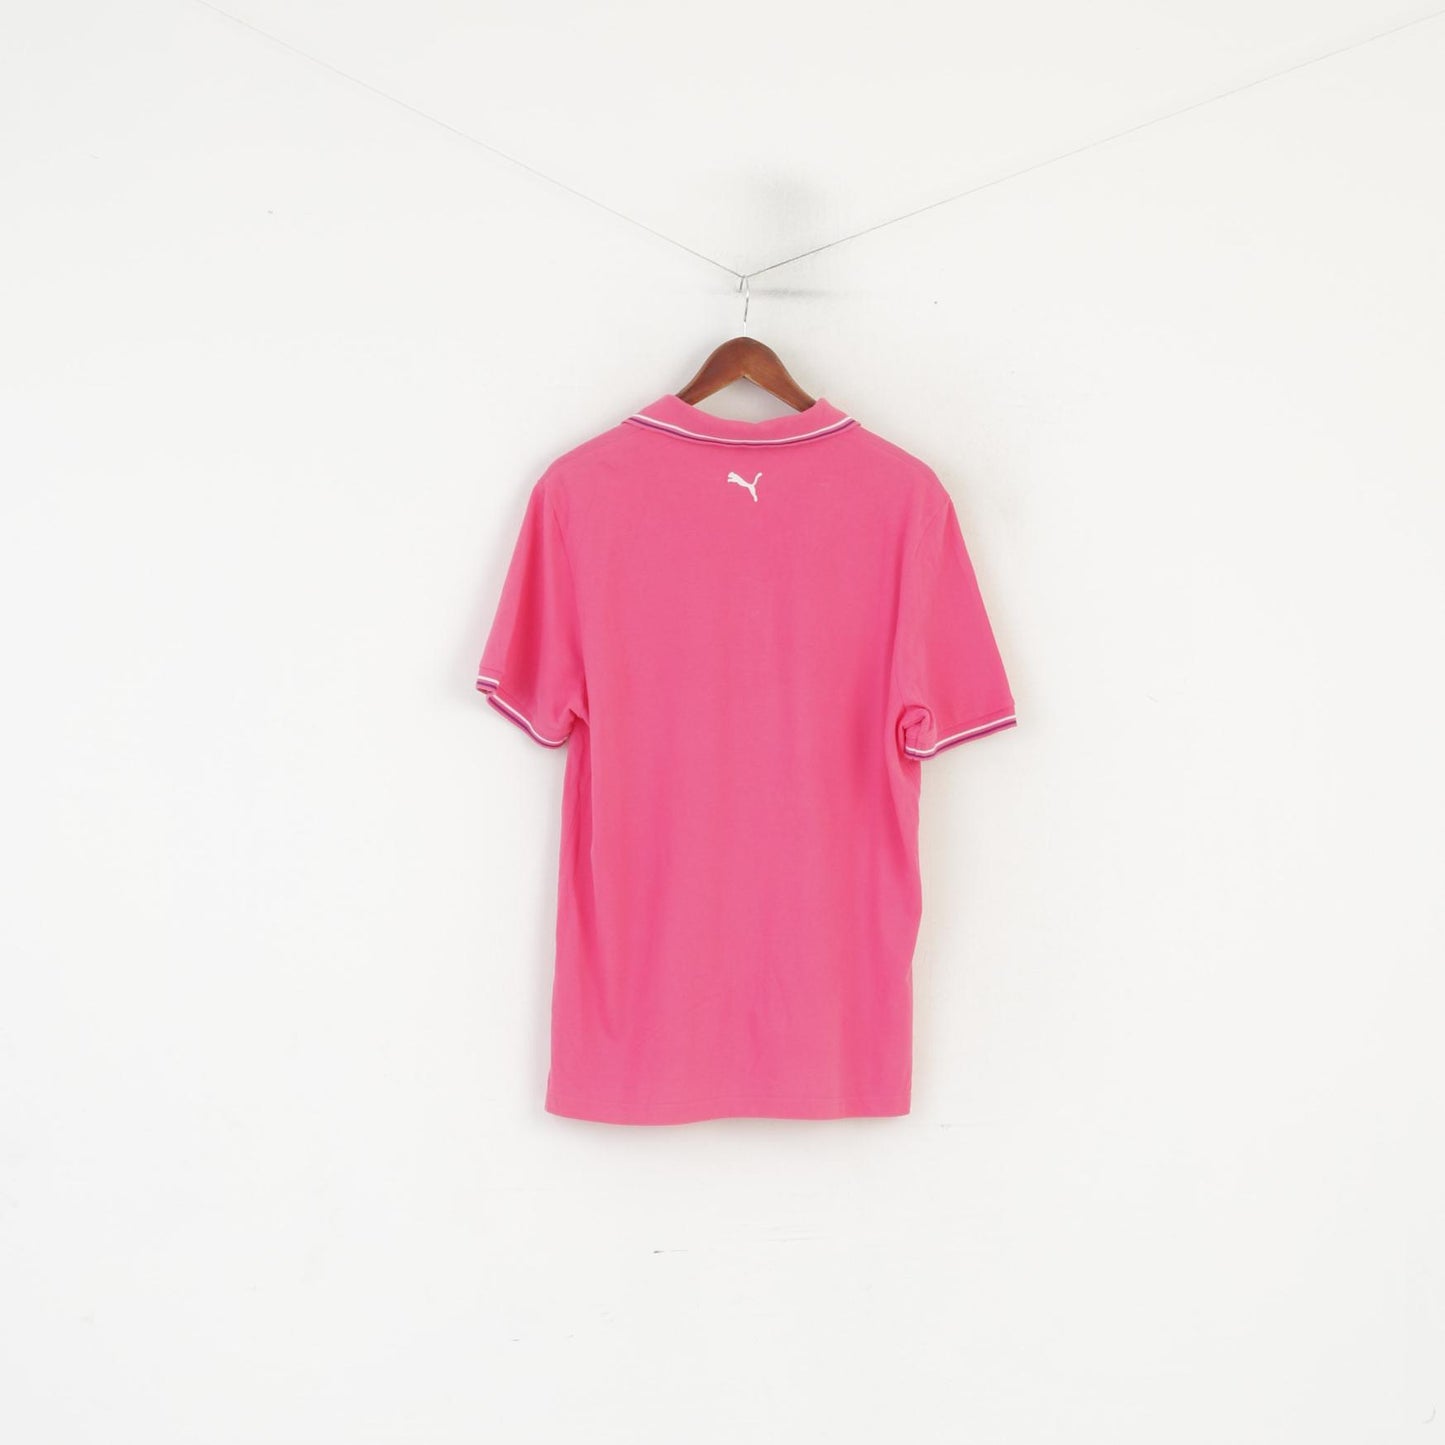 Puma Men L Polo Shirt Pink Cotton Plain Classic Sportswear Detailed Buttons Top